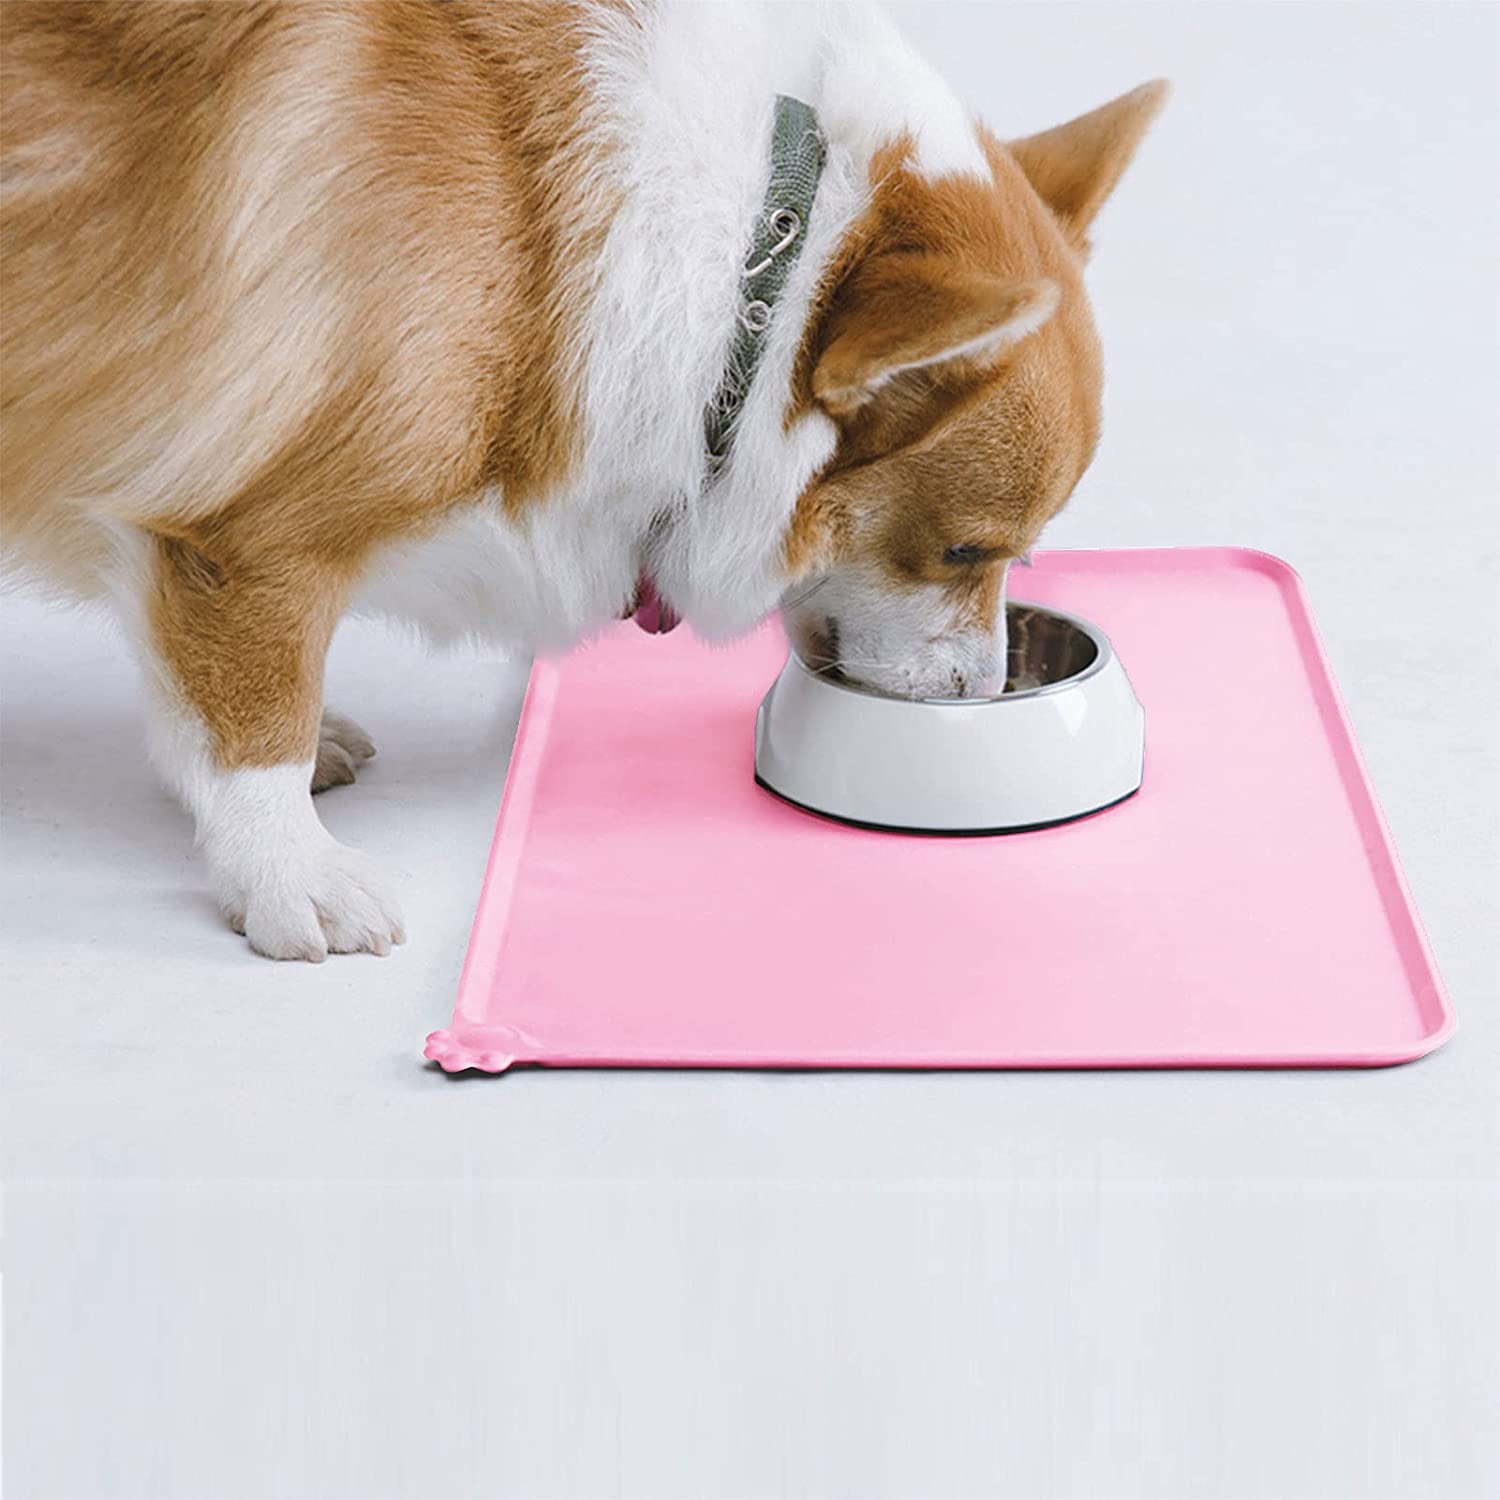  Stiio - Pet Feeding Mat, Rubber Backed Cat Food Mat